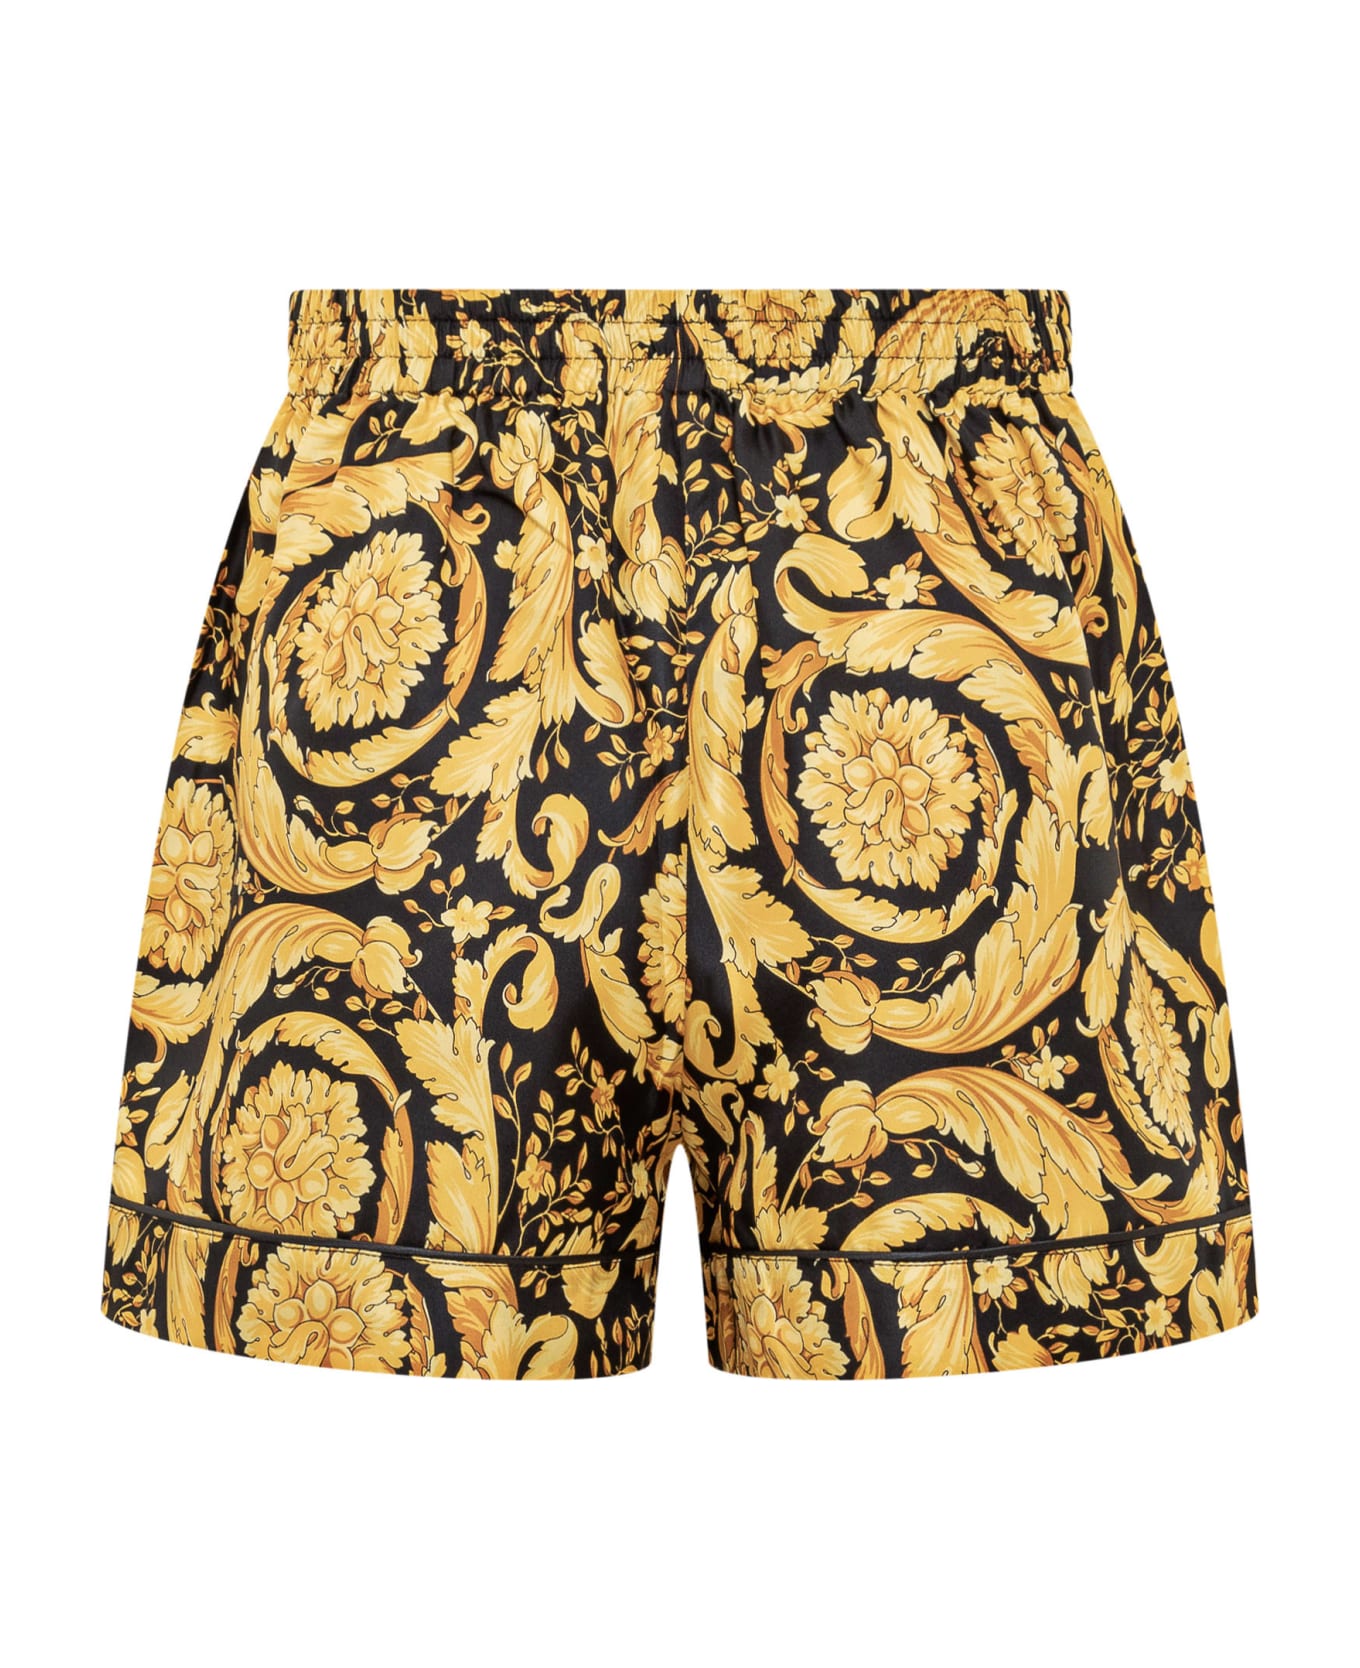 Versace Barocco Pajama Shorts - NERO ORO